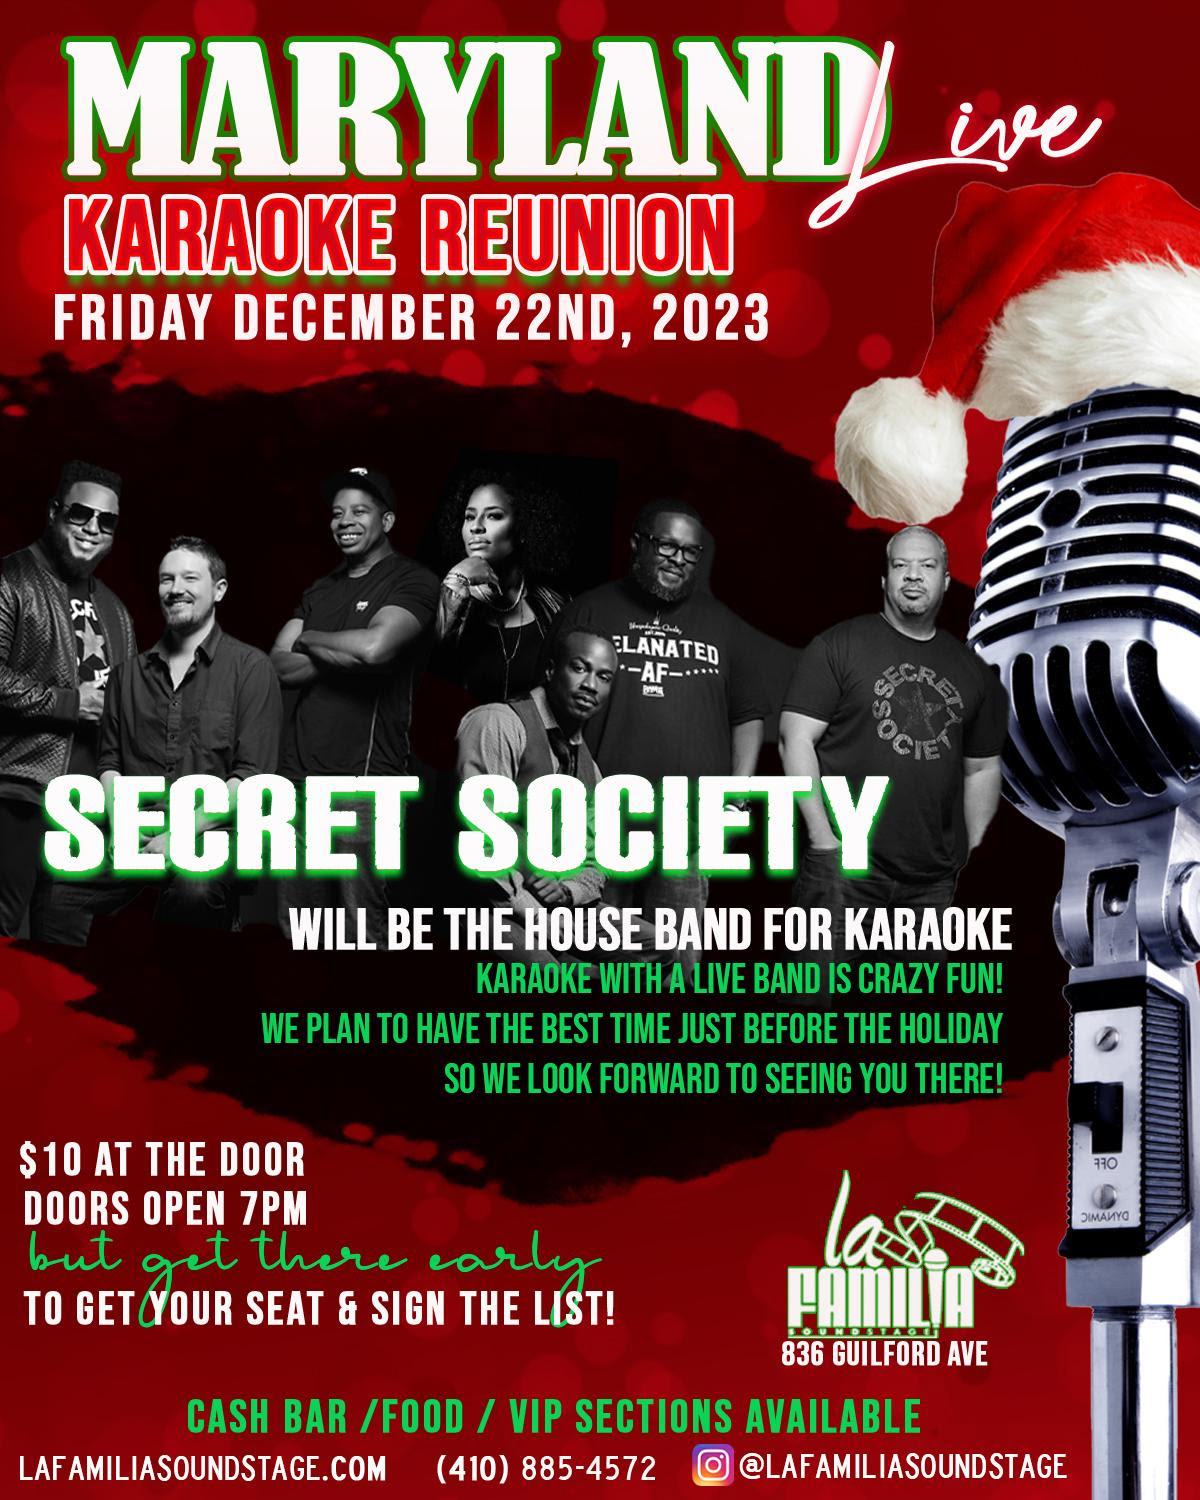 Karaoke Live Reunion at Maryland Live Casino flyer